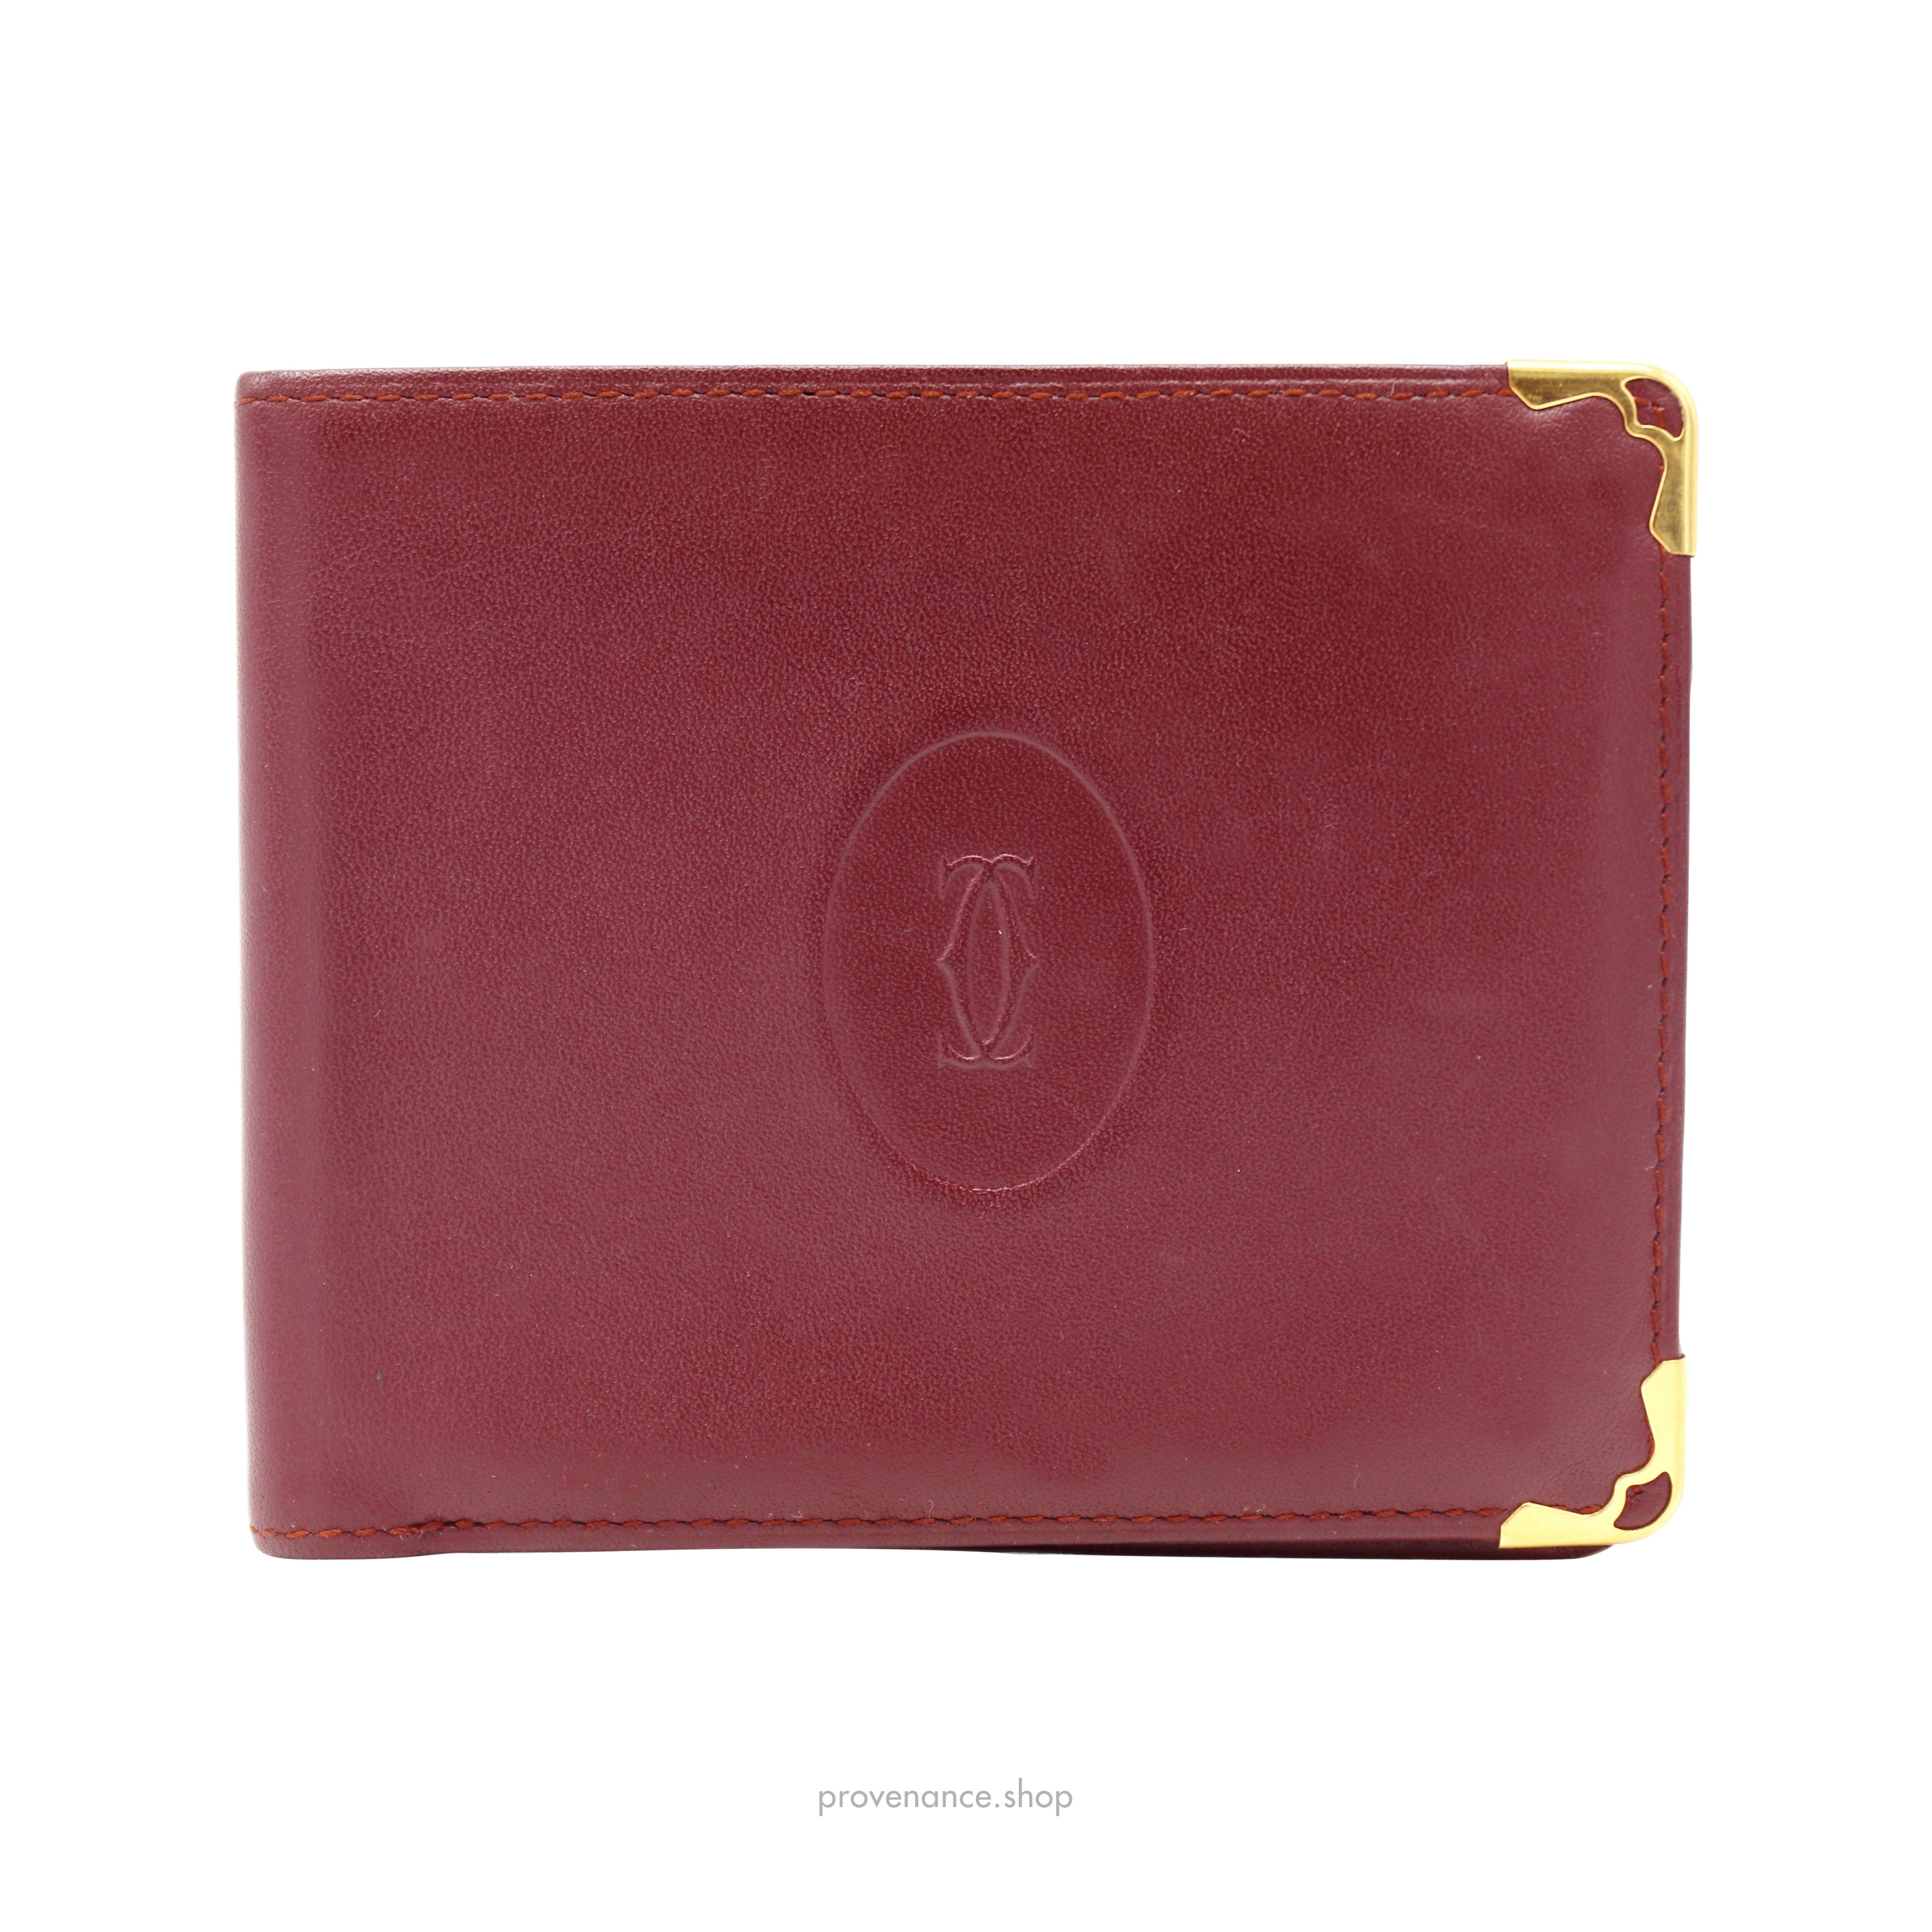 Bifold Wallet - Burgundy Calfskin Leather - 1